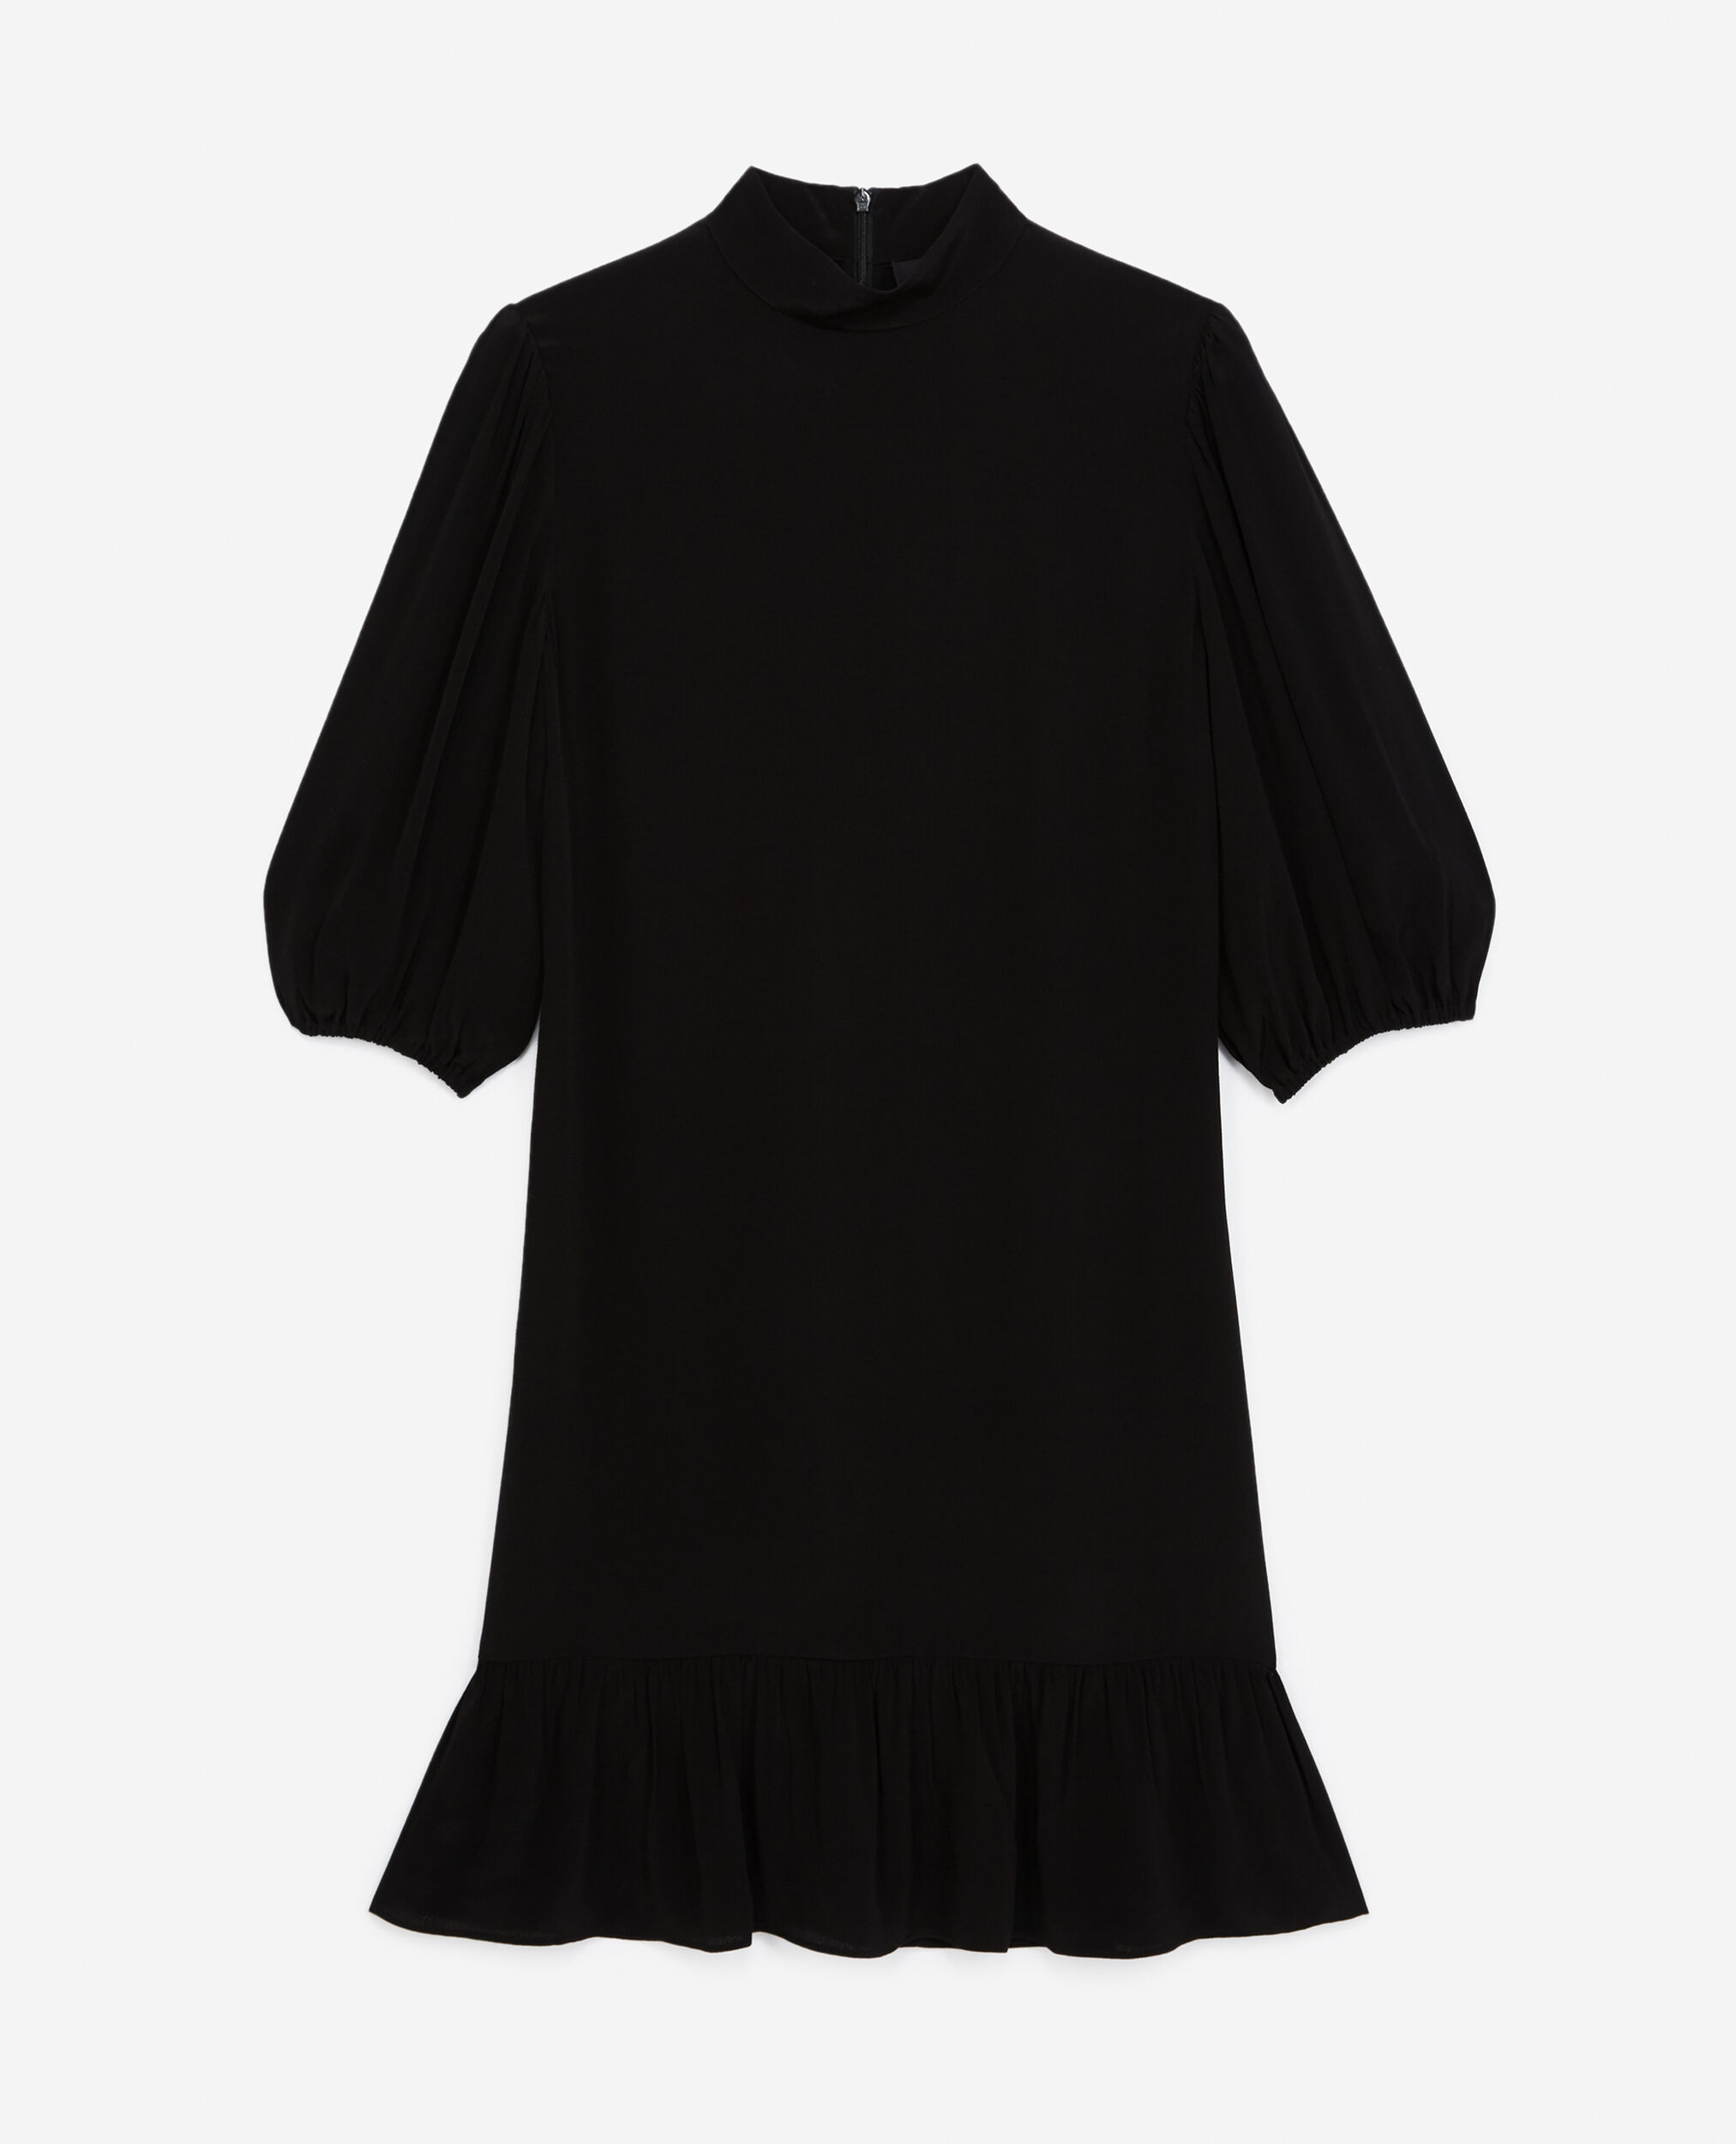 Schwarzes kurzes Kleid Volants Stehkragen, BLACK, hi-res image number null